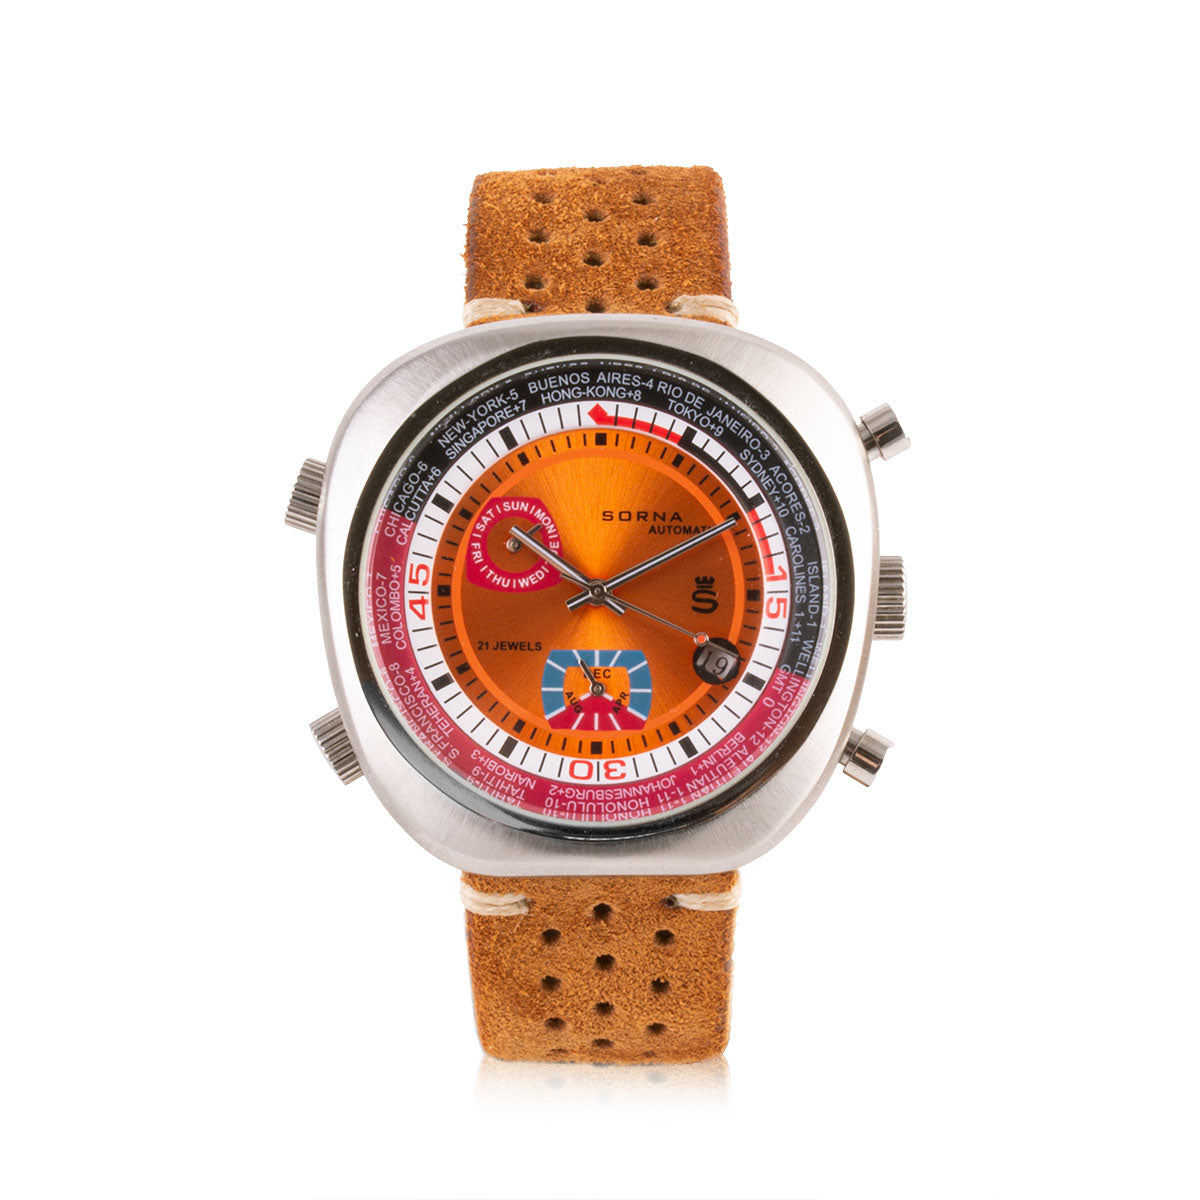 Second-hand watch - Sorna Diver - 850€